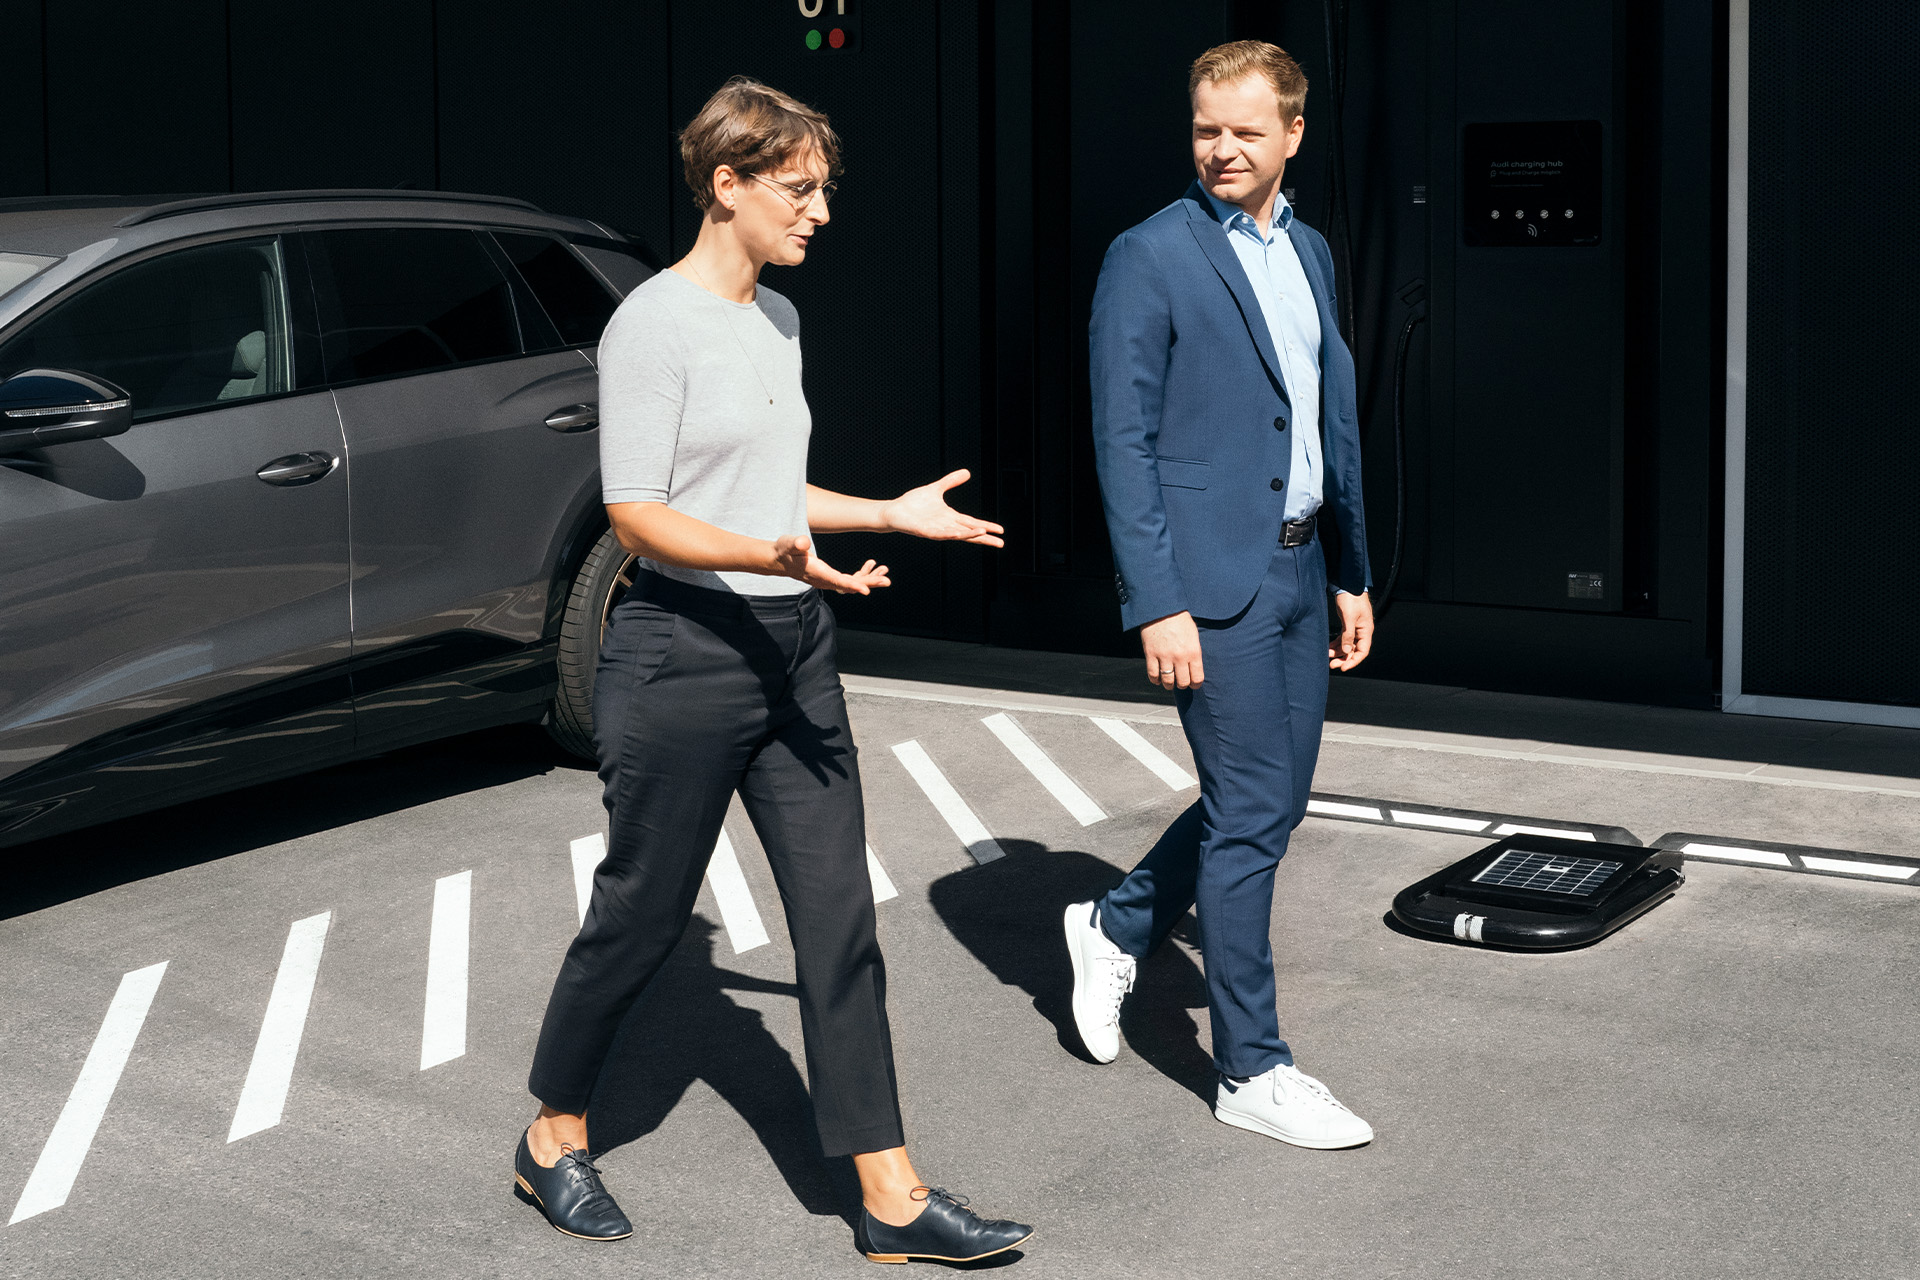 Johanna Klewitz en Malte Vömel in gesprek buiten de Audi charging hub Neurenberg.